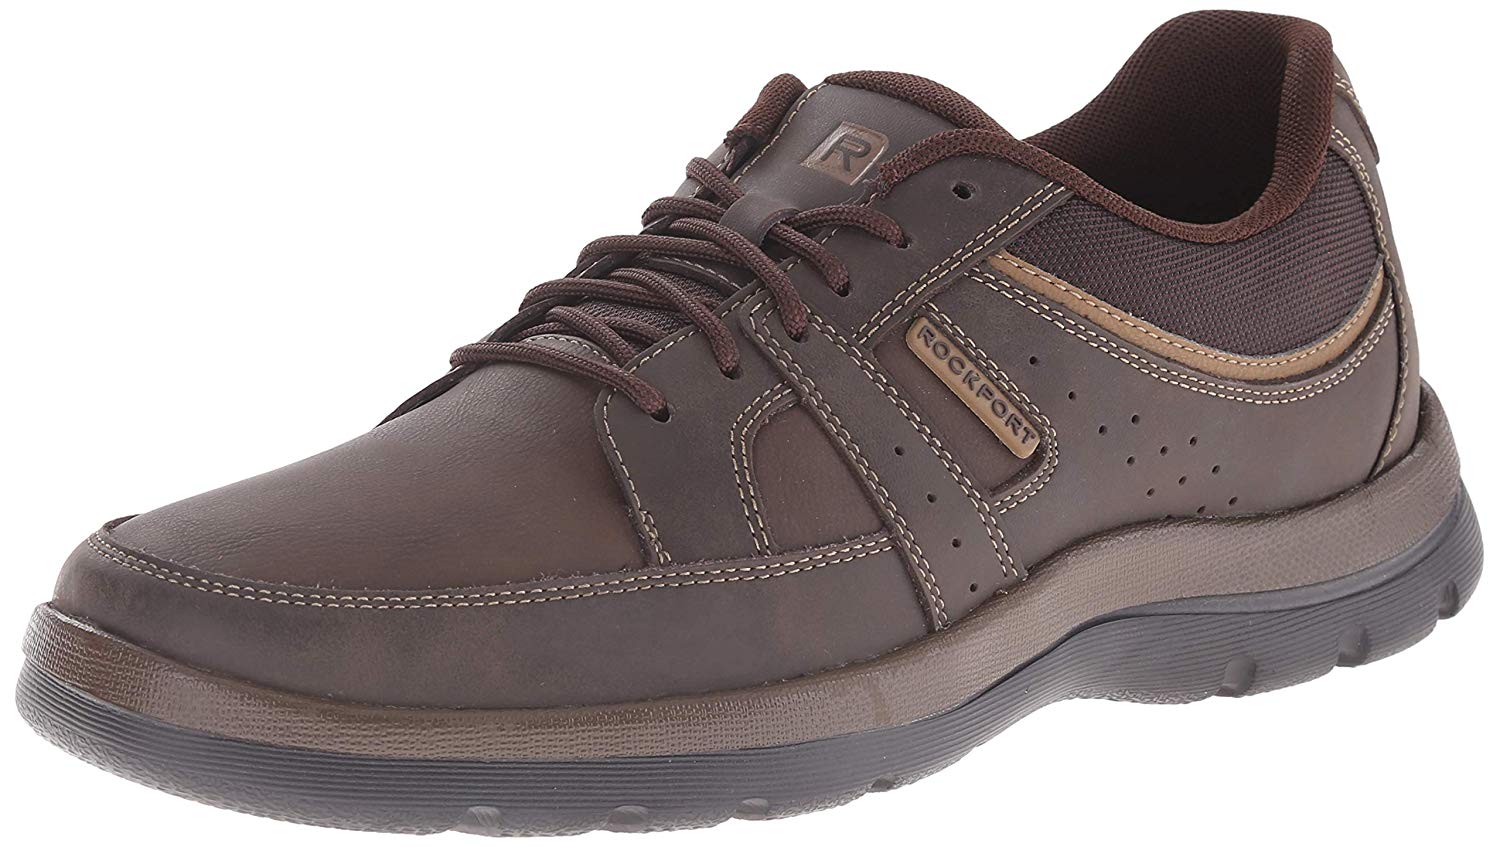 Rockport Men's Get Your Kicks Blucher Fashion Sneaker, Brown, Size 13.0 ...